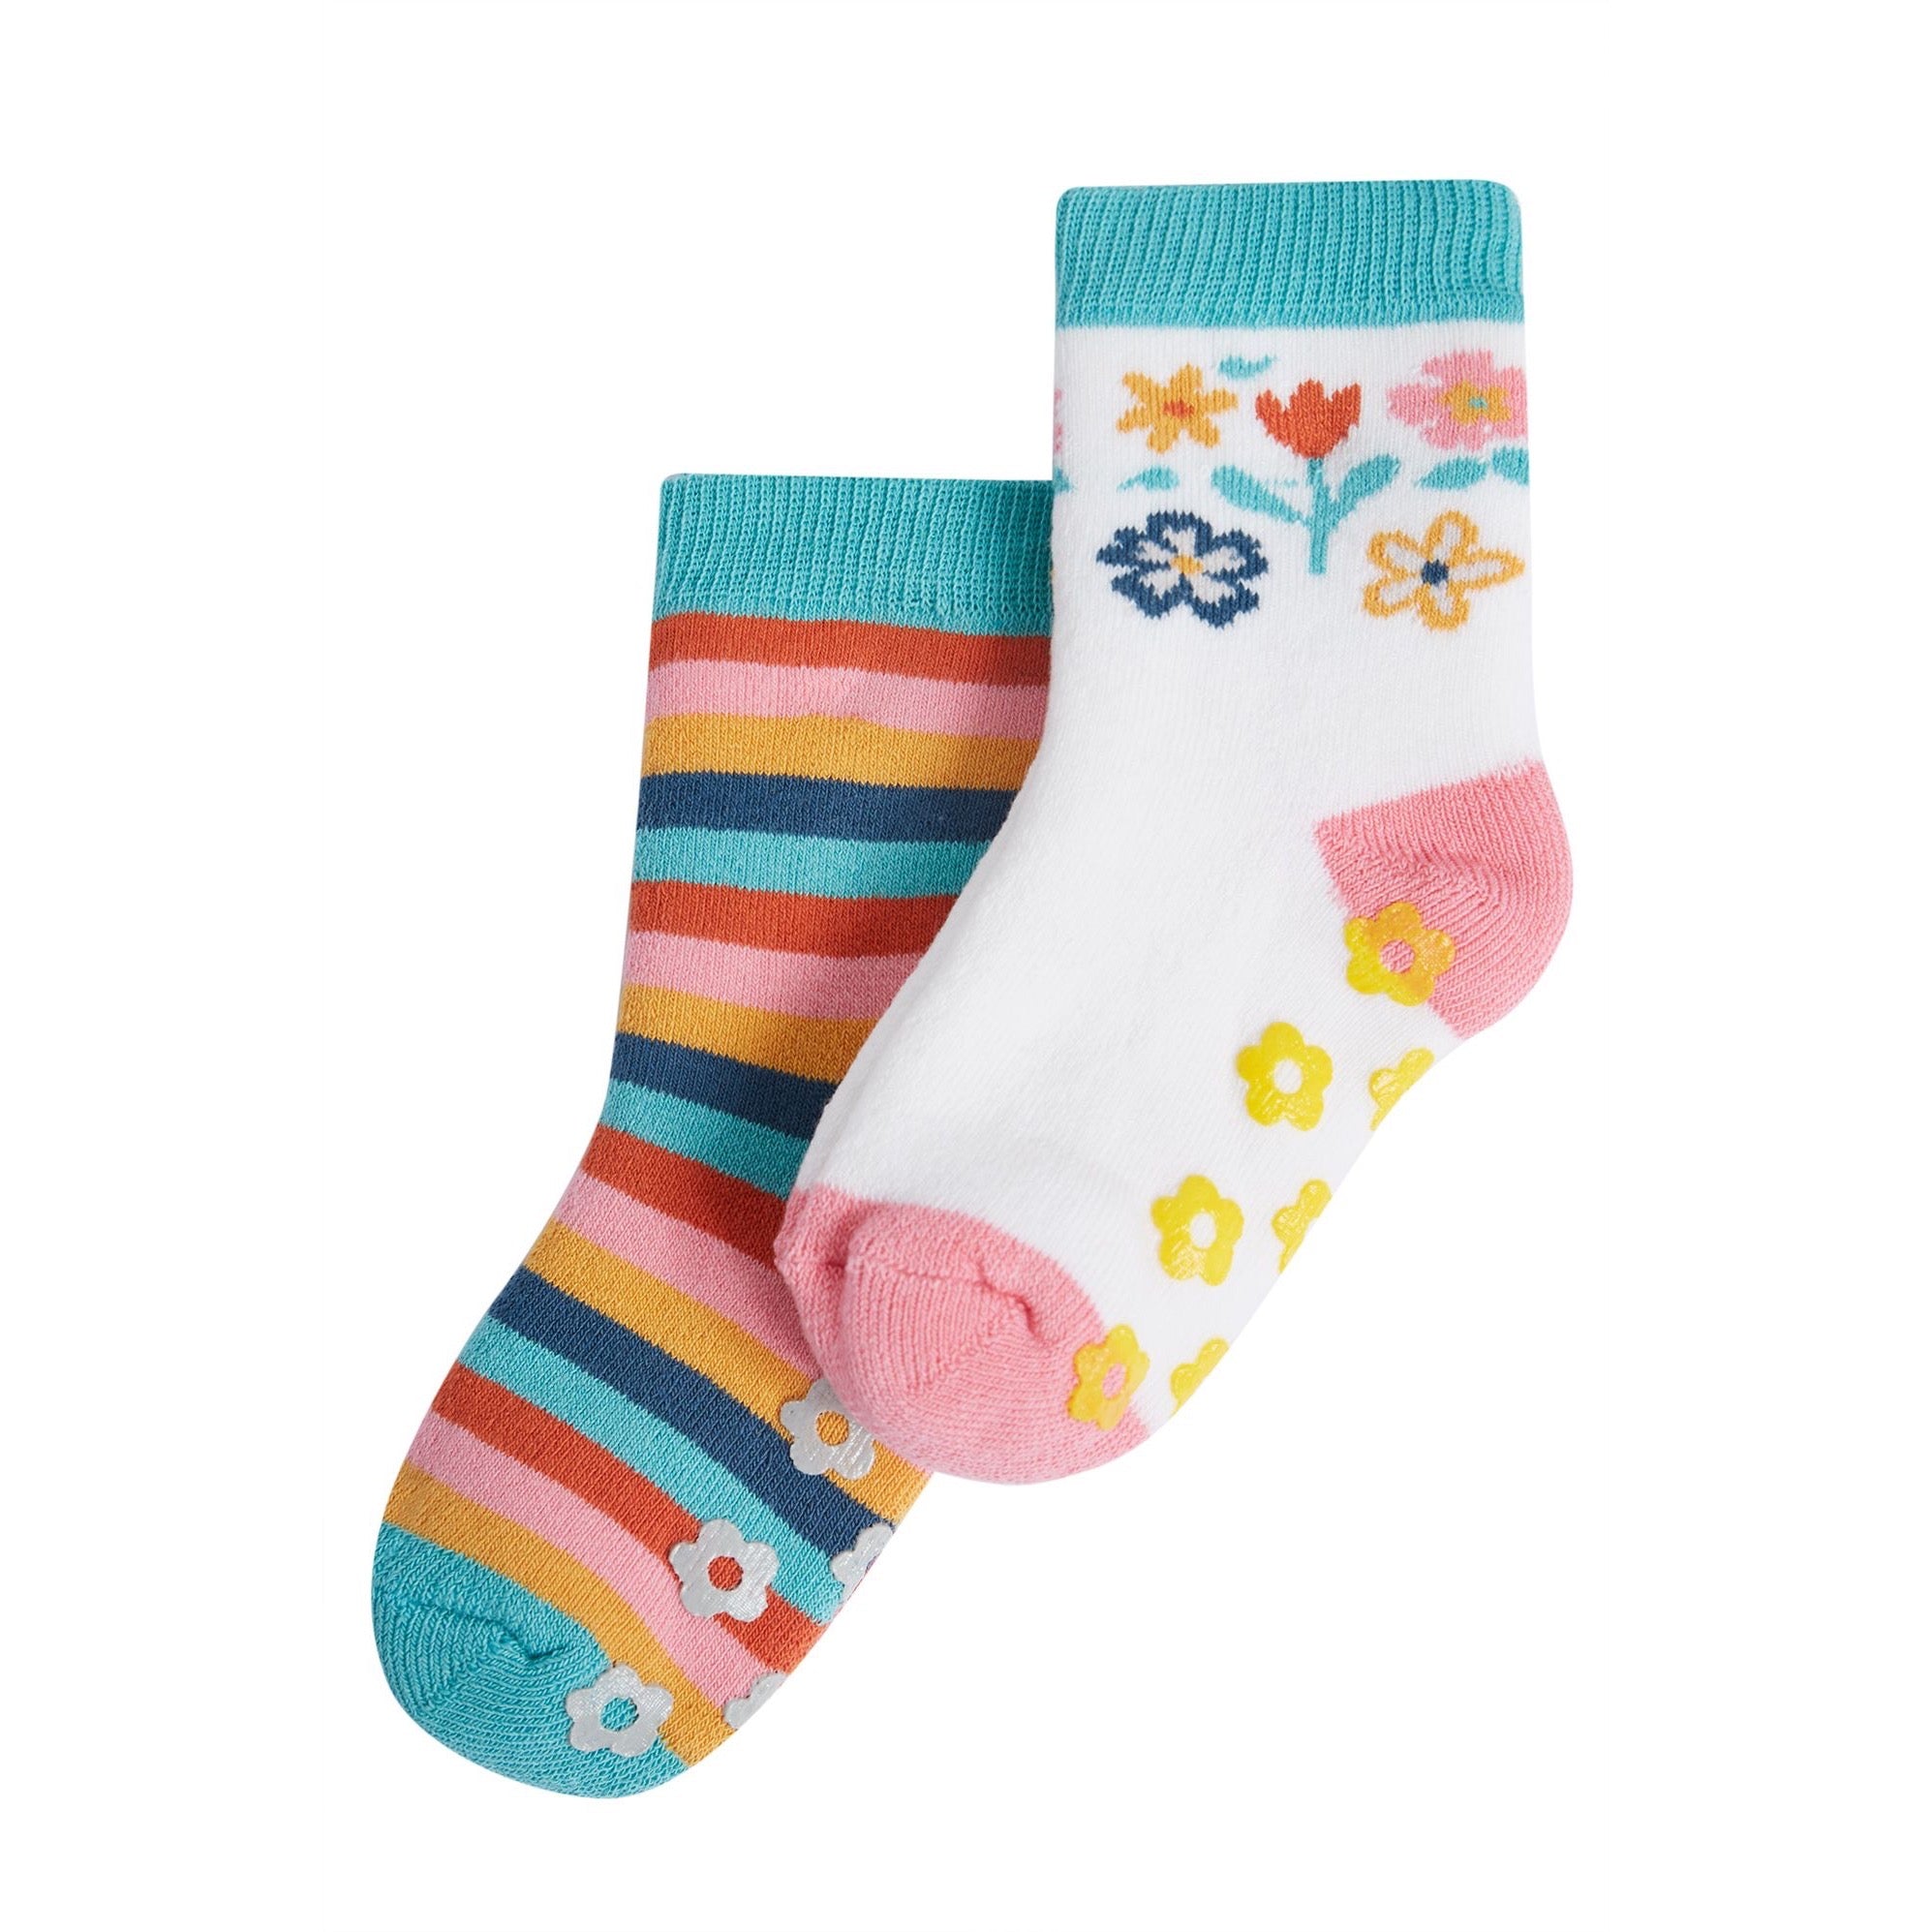 Frugi 2 Pack Grippy Socks Floral Stripe Clothing 0-6M / Multi,6-12M / Multi,1-2YRS / Multi,UK6-8 / Multi